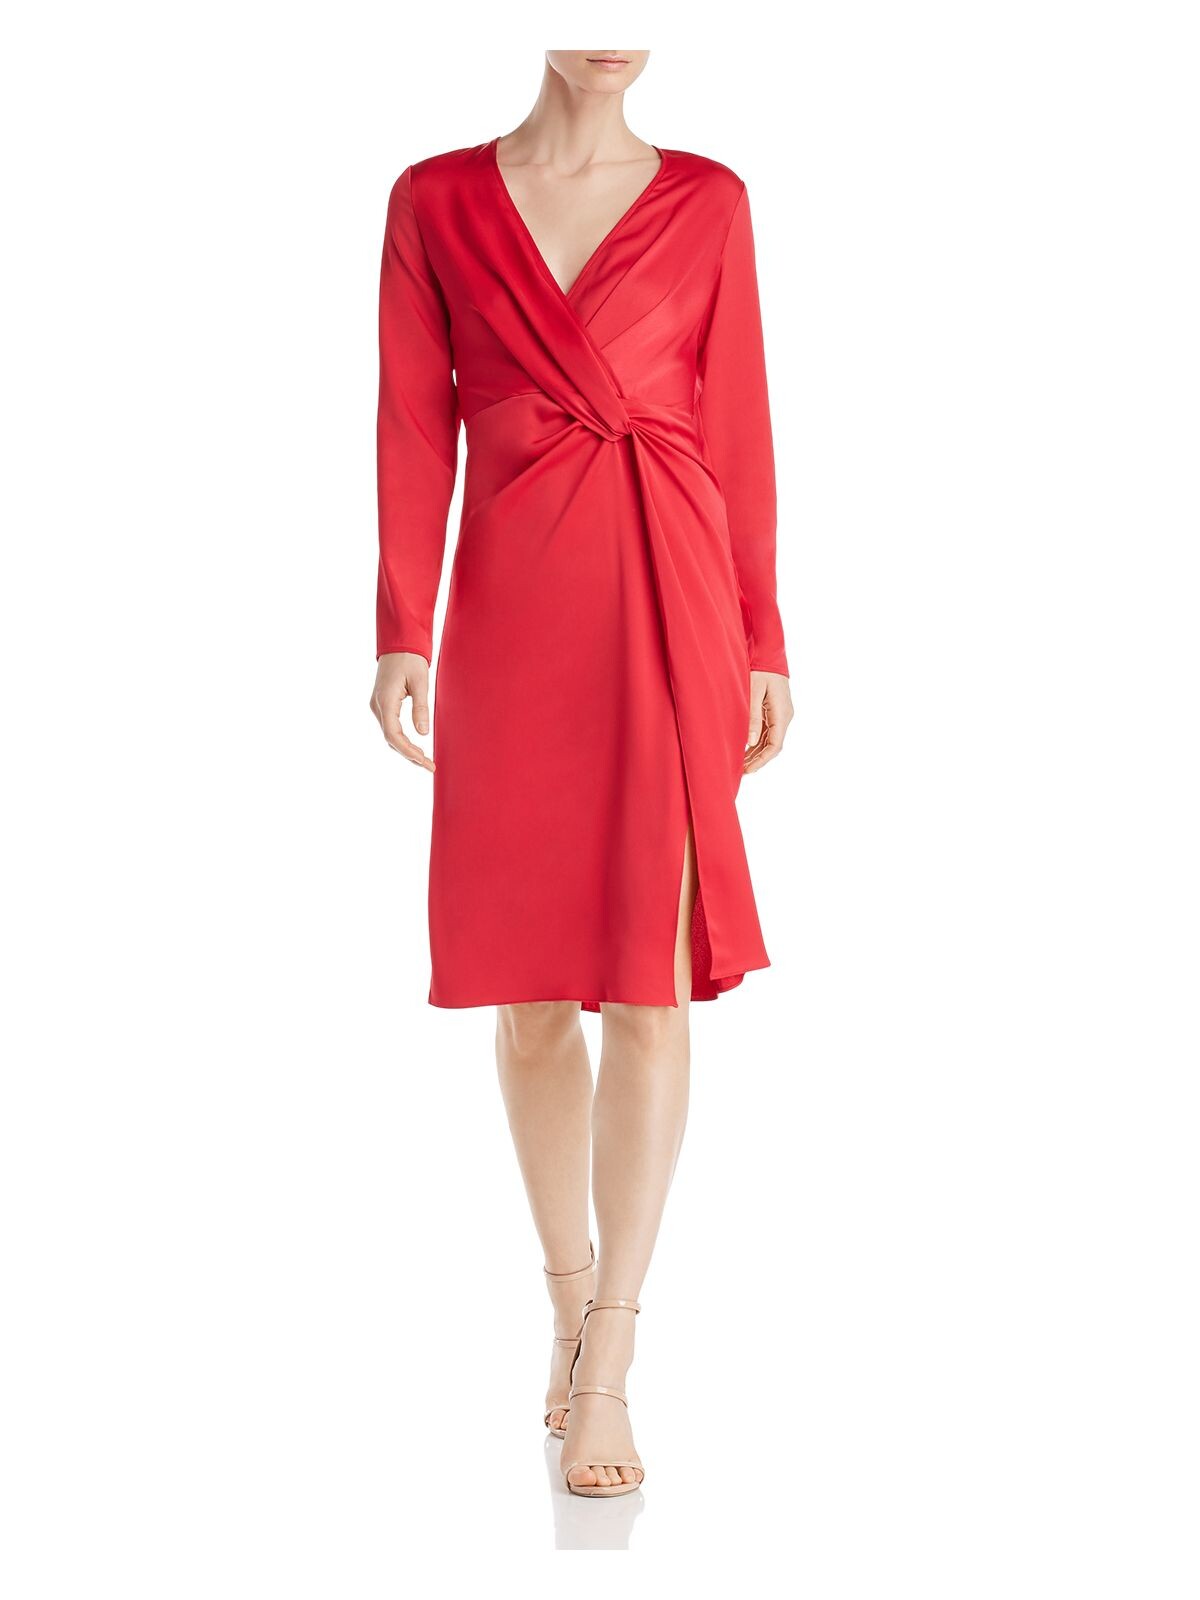 JAY GODFREY Womens Red Long Sleeve V Neck Above The Knee Evening Dress 10